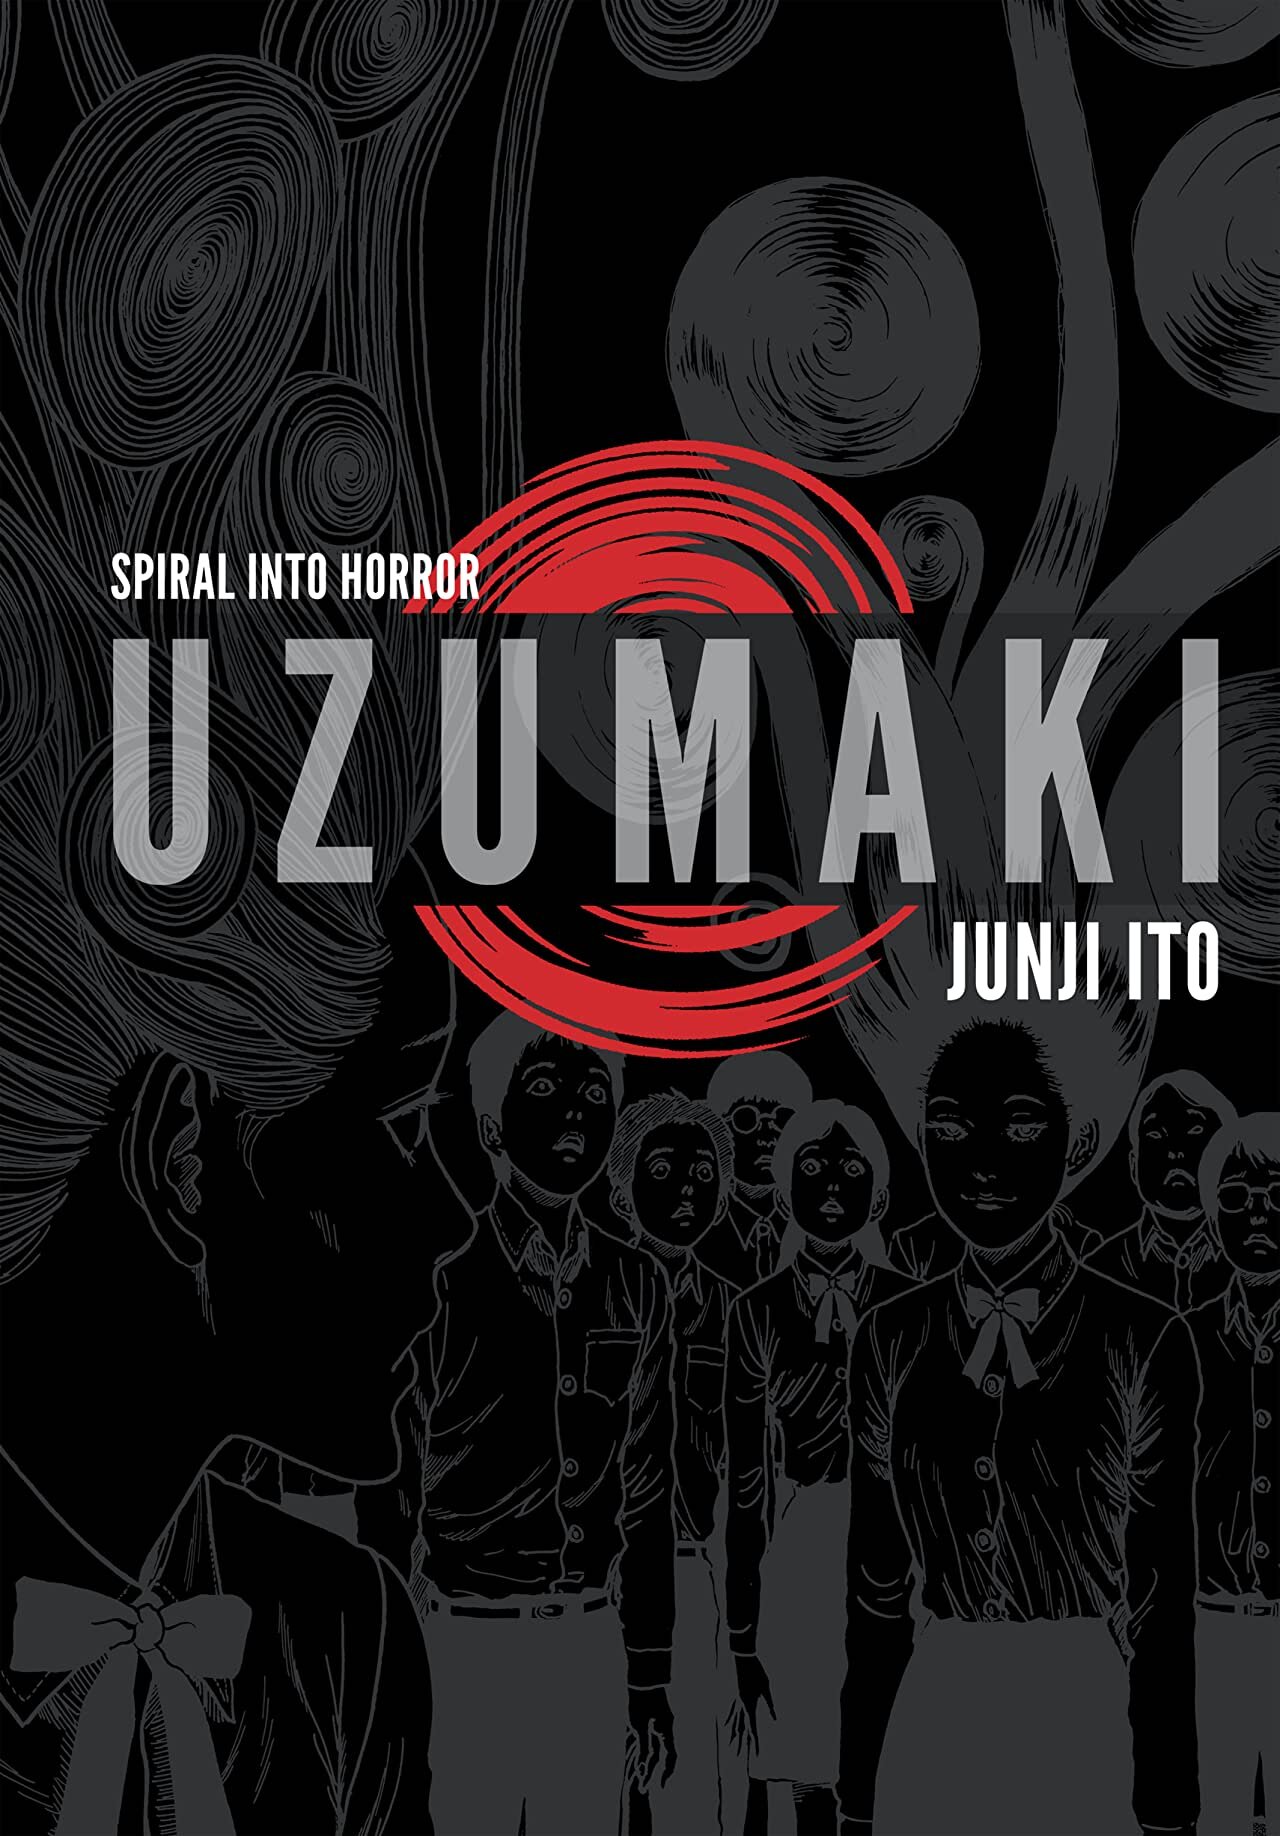 The Uzumaki Affairs